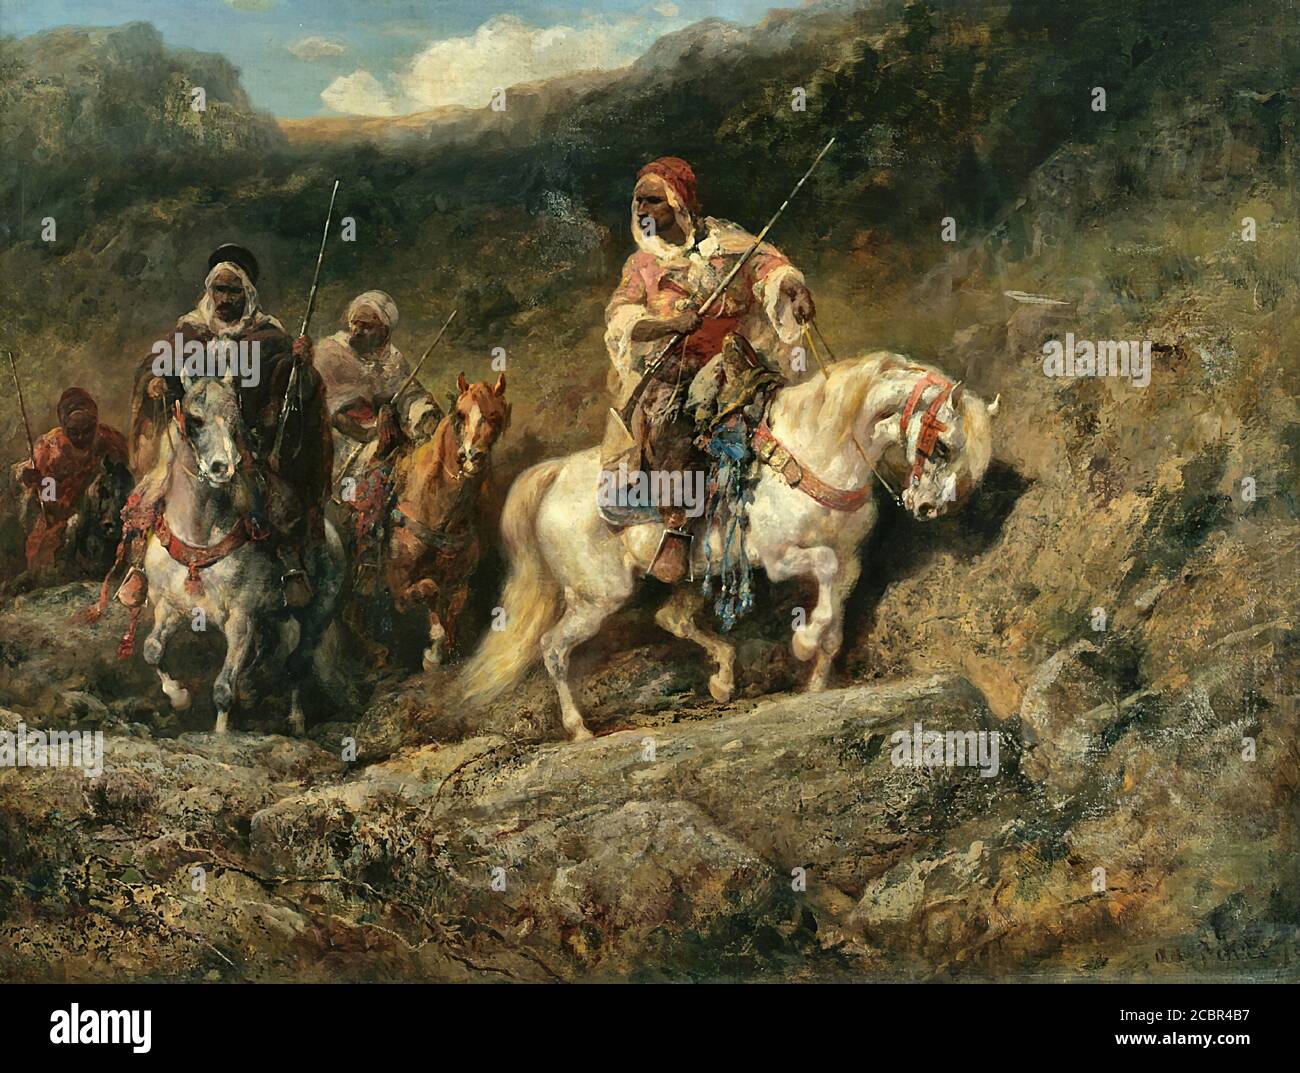 Schreyer Adolf - Arab Horsemen in a Mountainous Landscape - German School - 19th and Early 20th Century Stock Photo